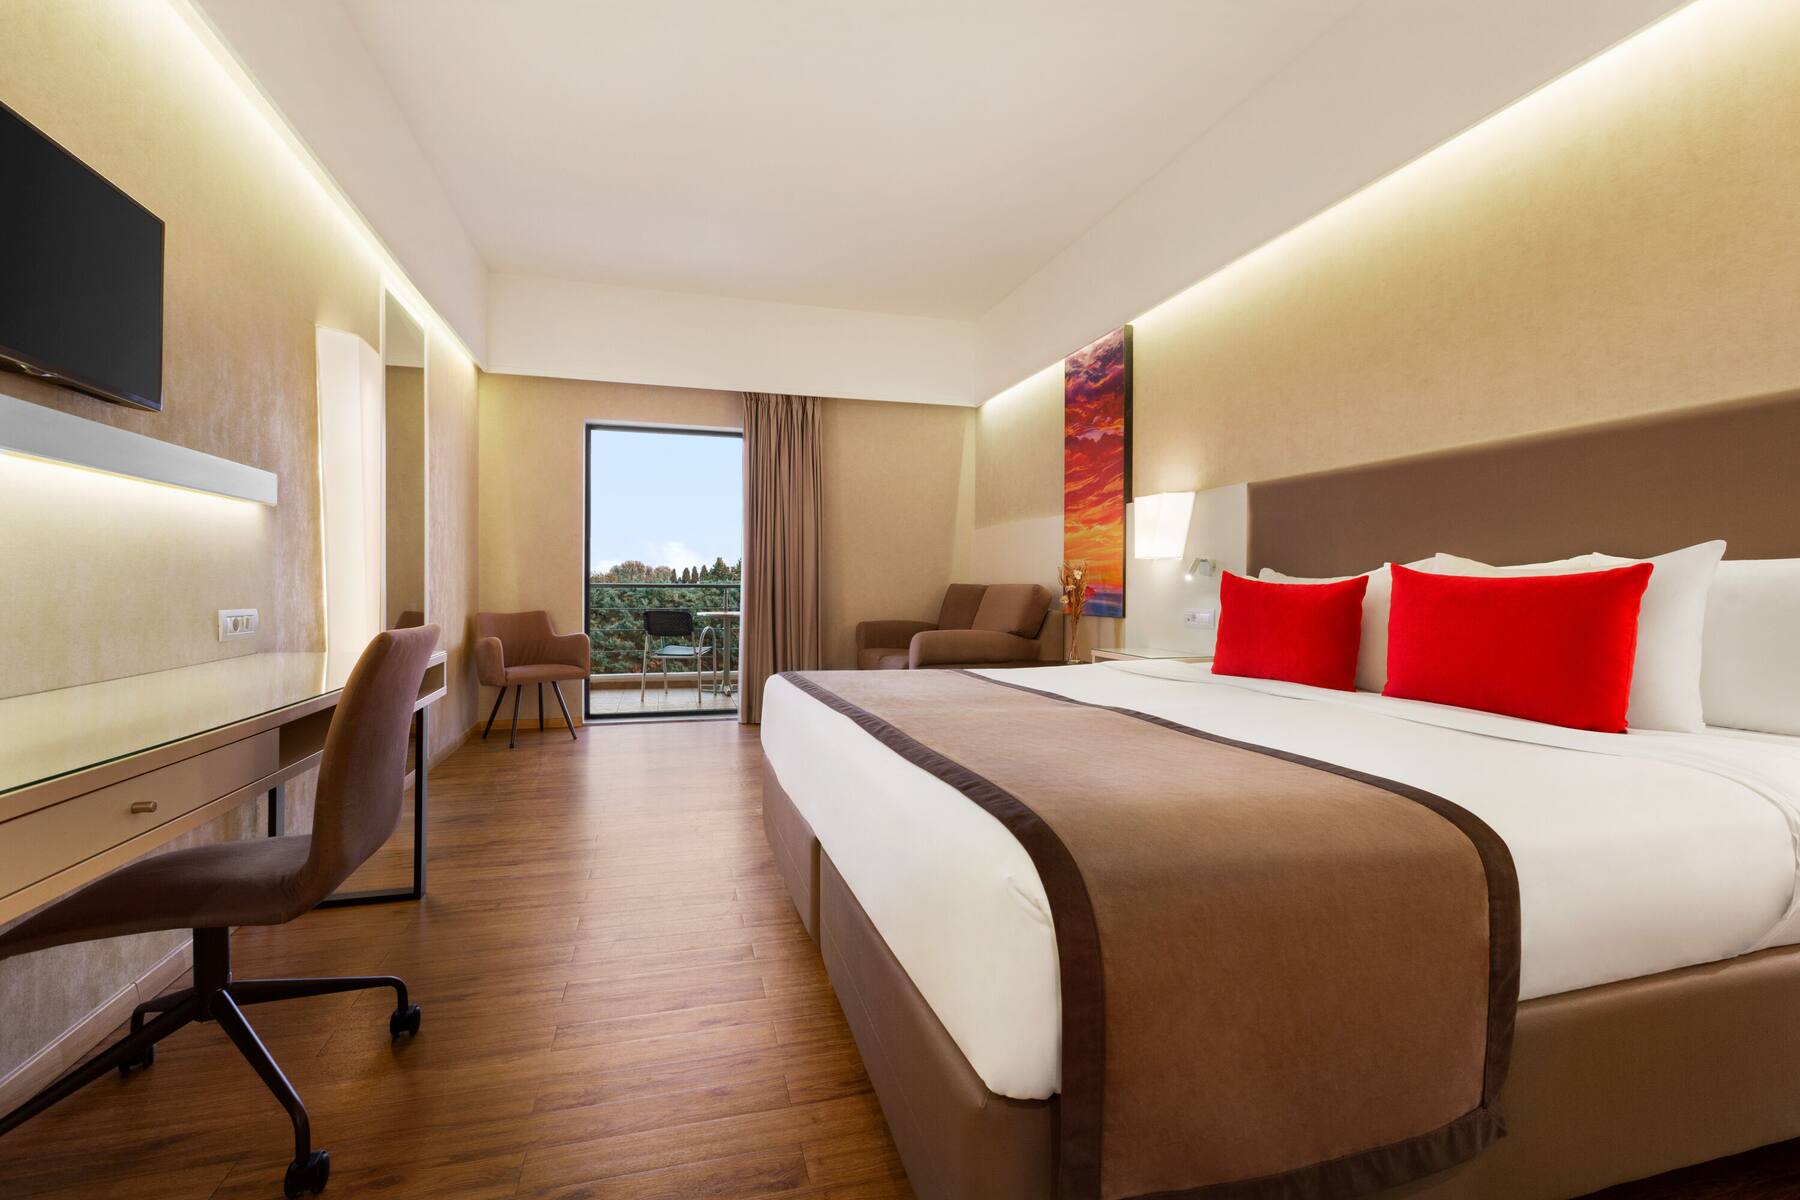 Hotel Ramada Plaza Thraki room.jpg